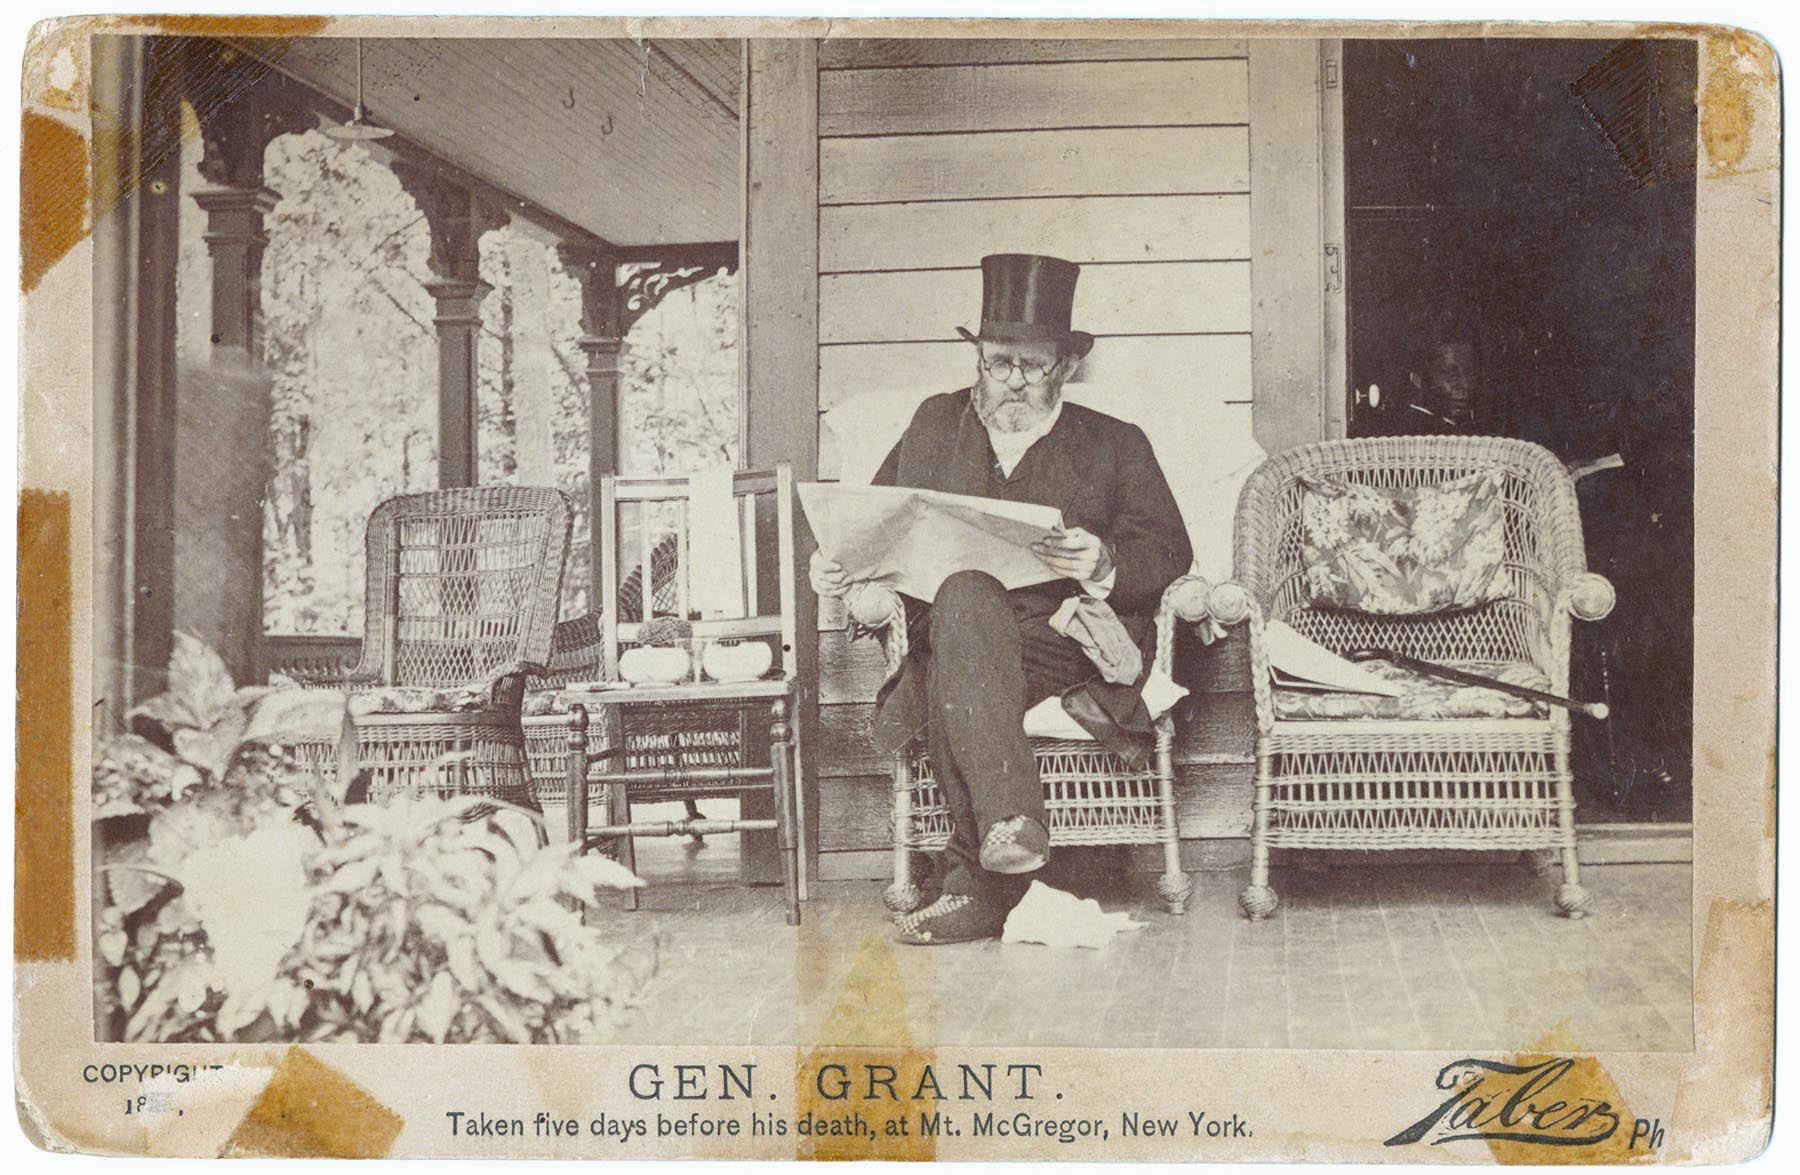 Gen. Grant - Taken five days before his death at Mt. McGregor, New York